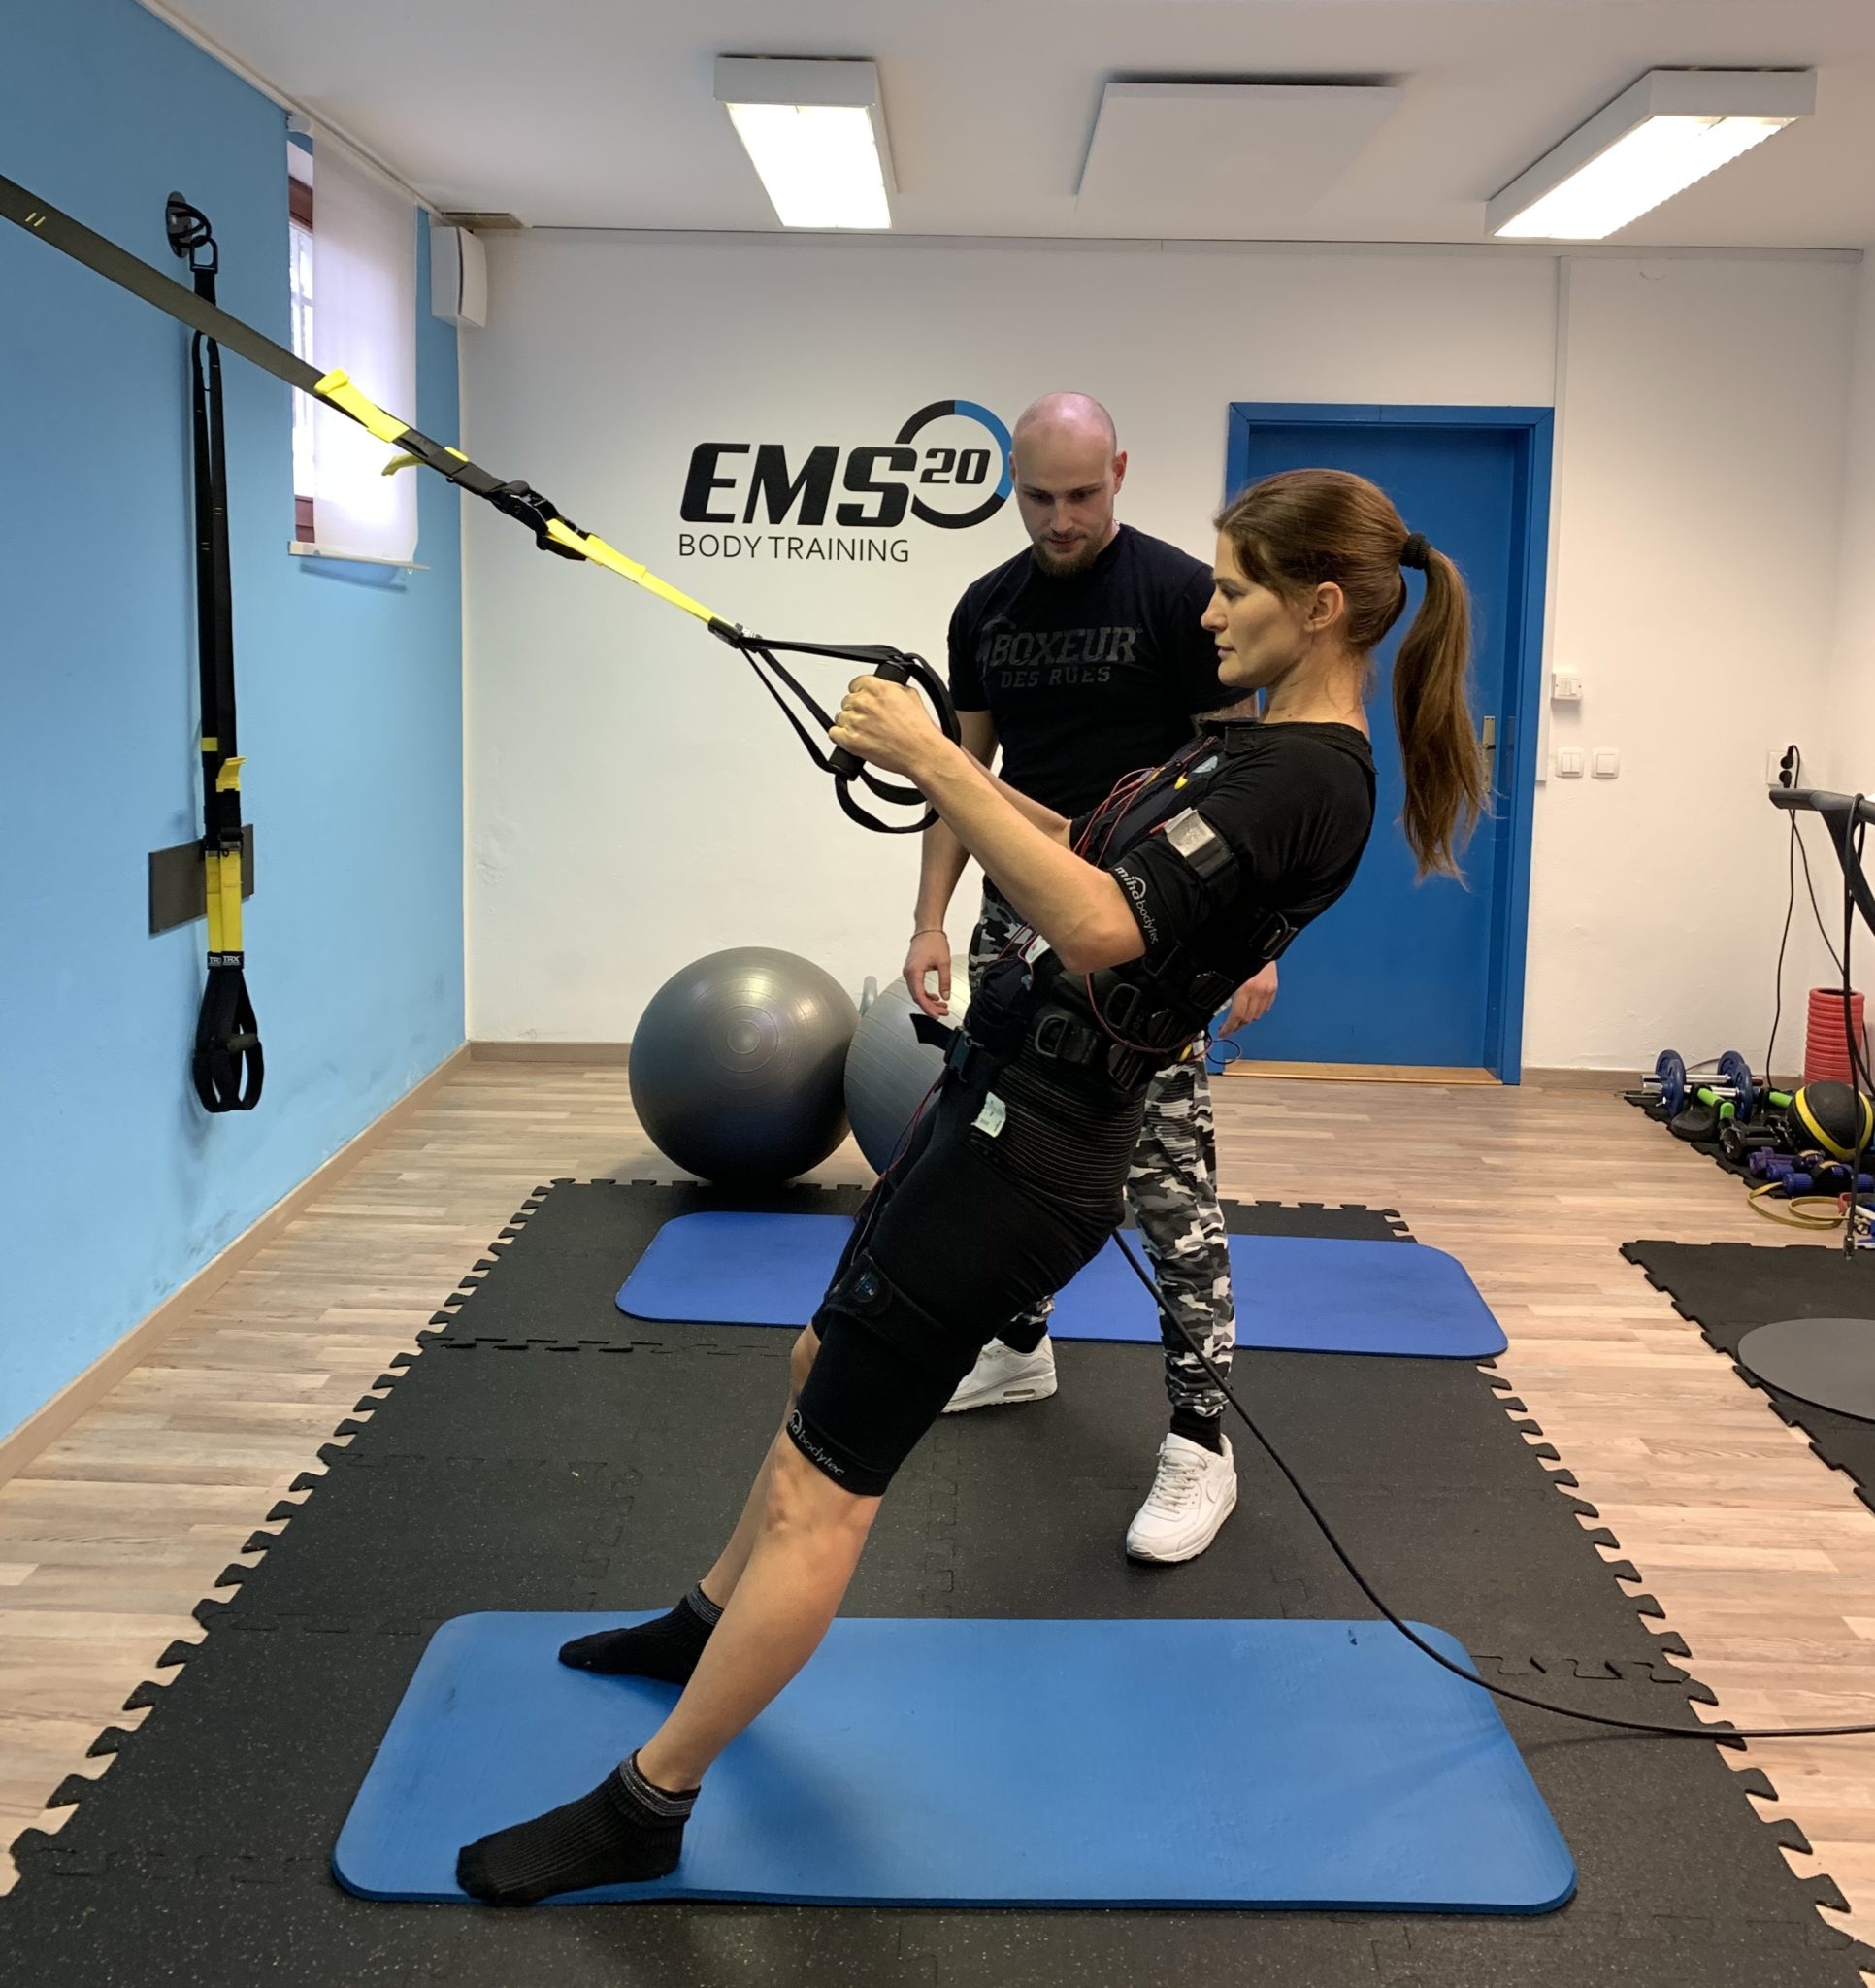 Doing a bodytech workout with EMS 20 Training, Slovenia, Ljubljana